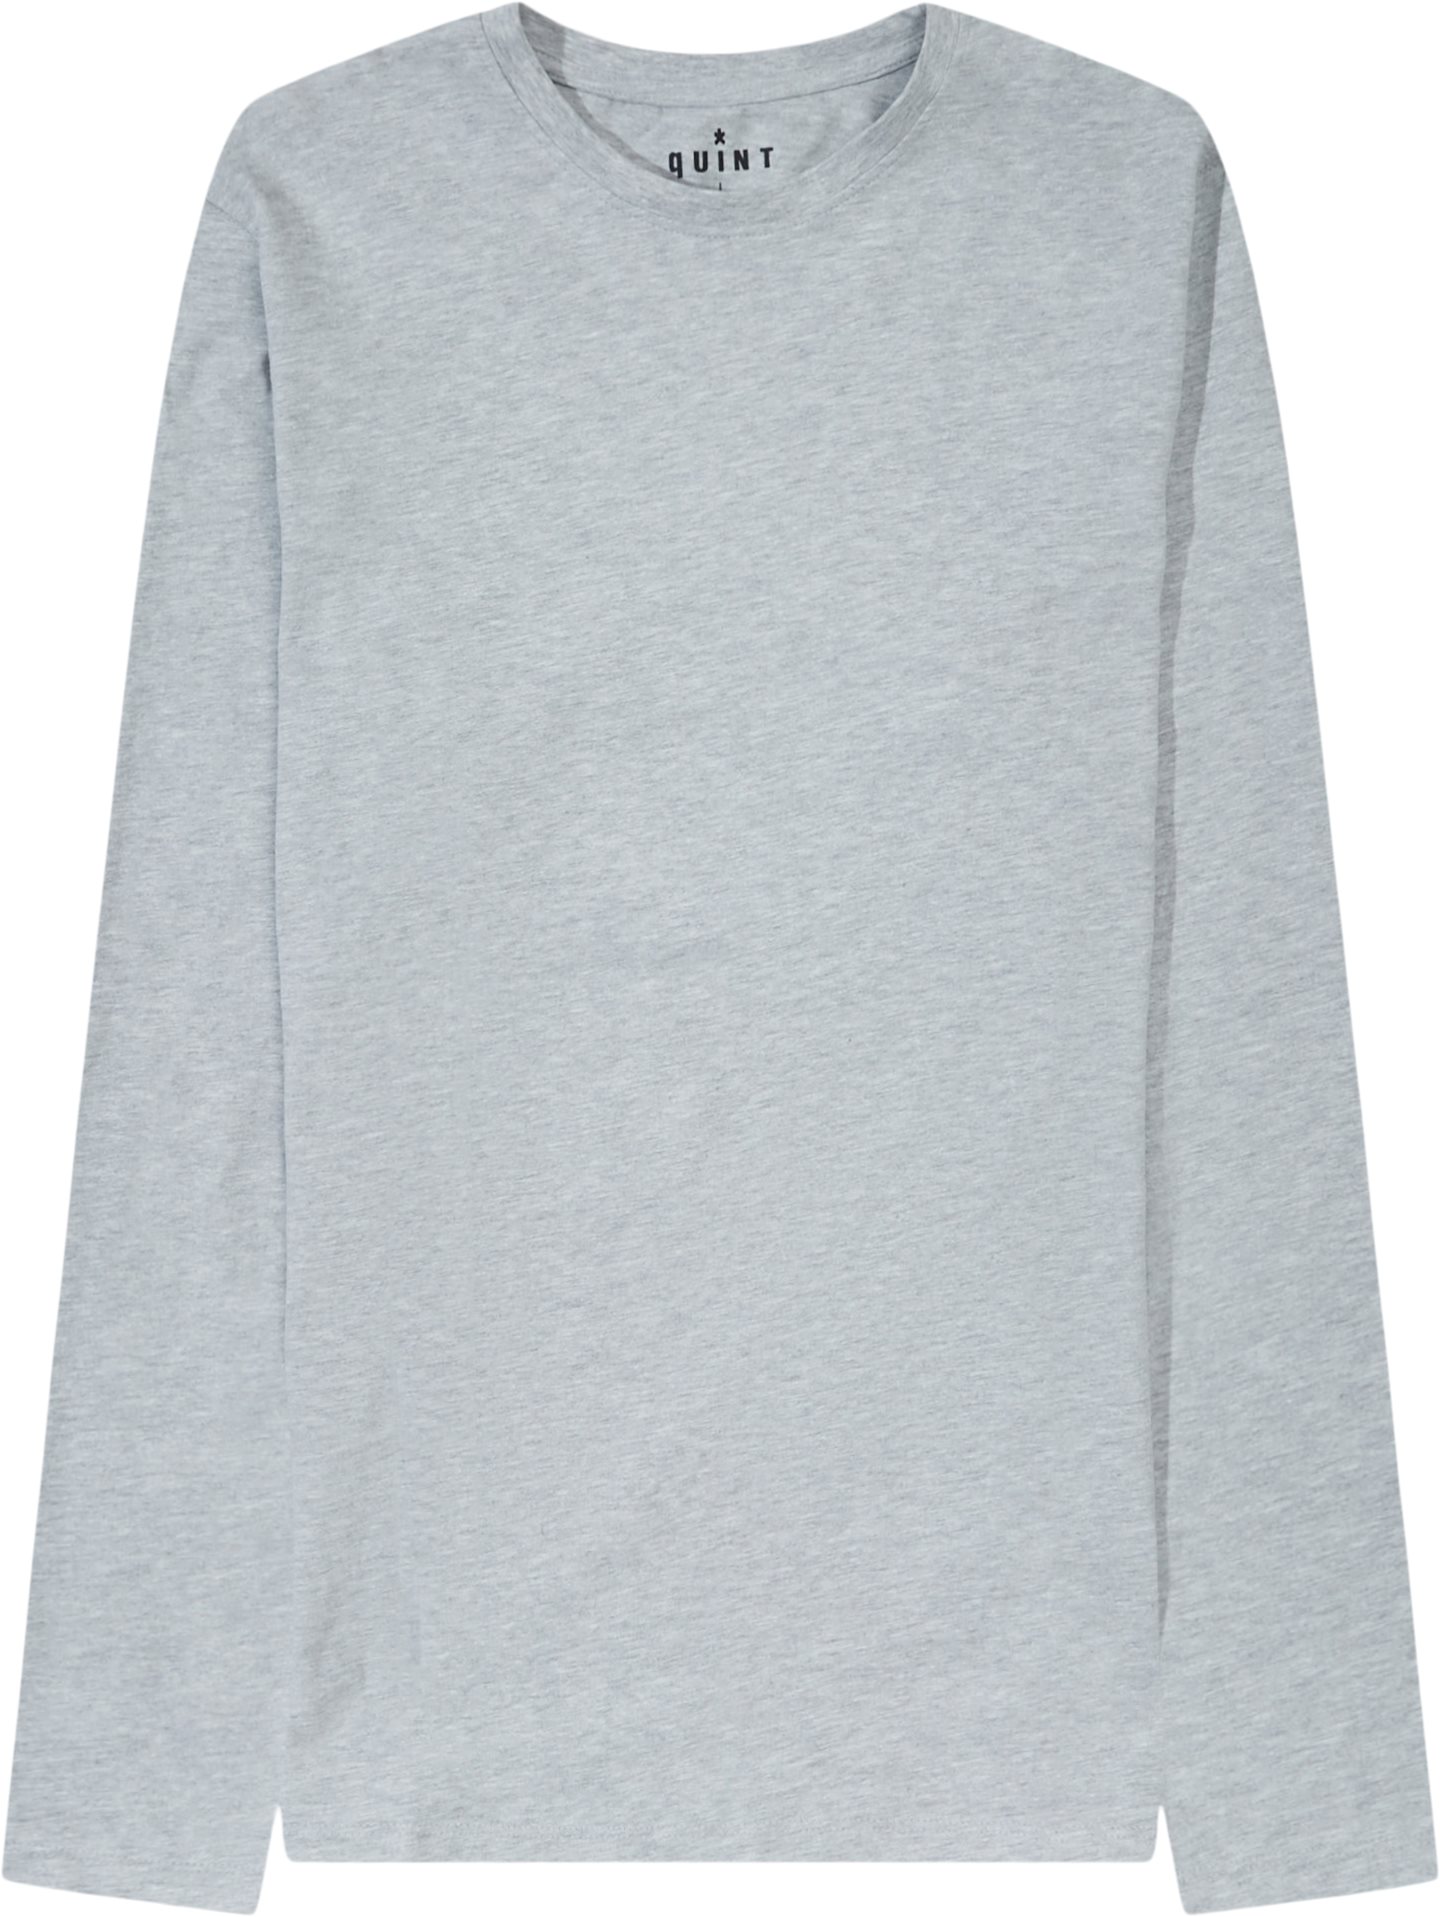 Ray Long Sleeve Tee - T-shirts - Regular fit - Grey